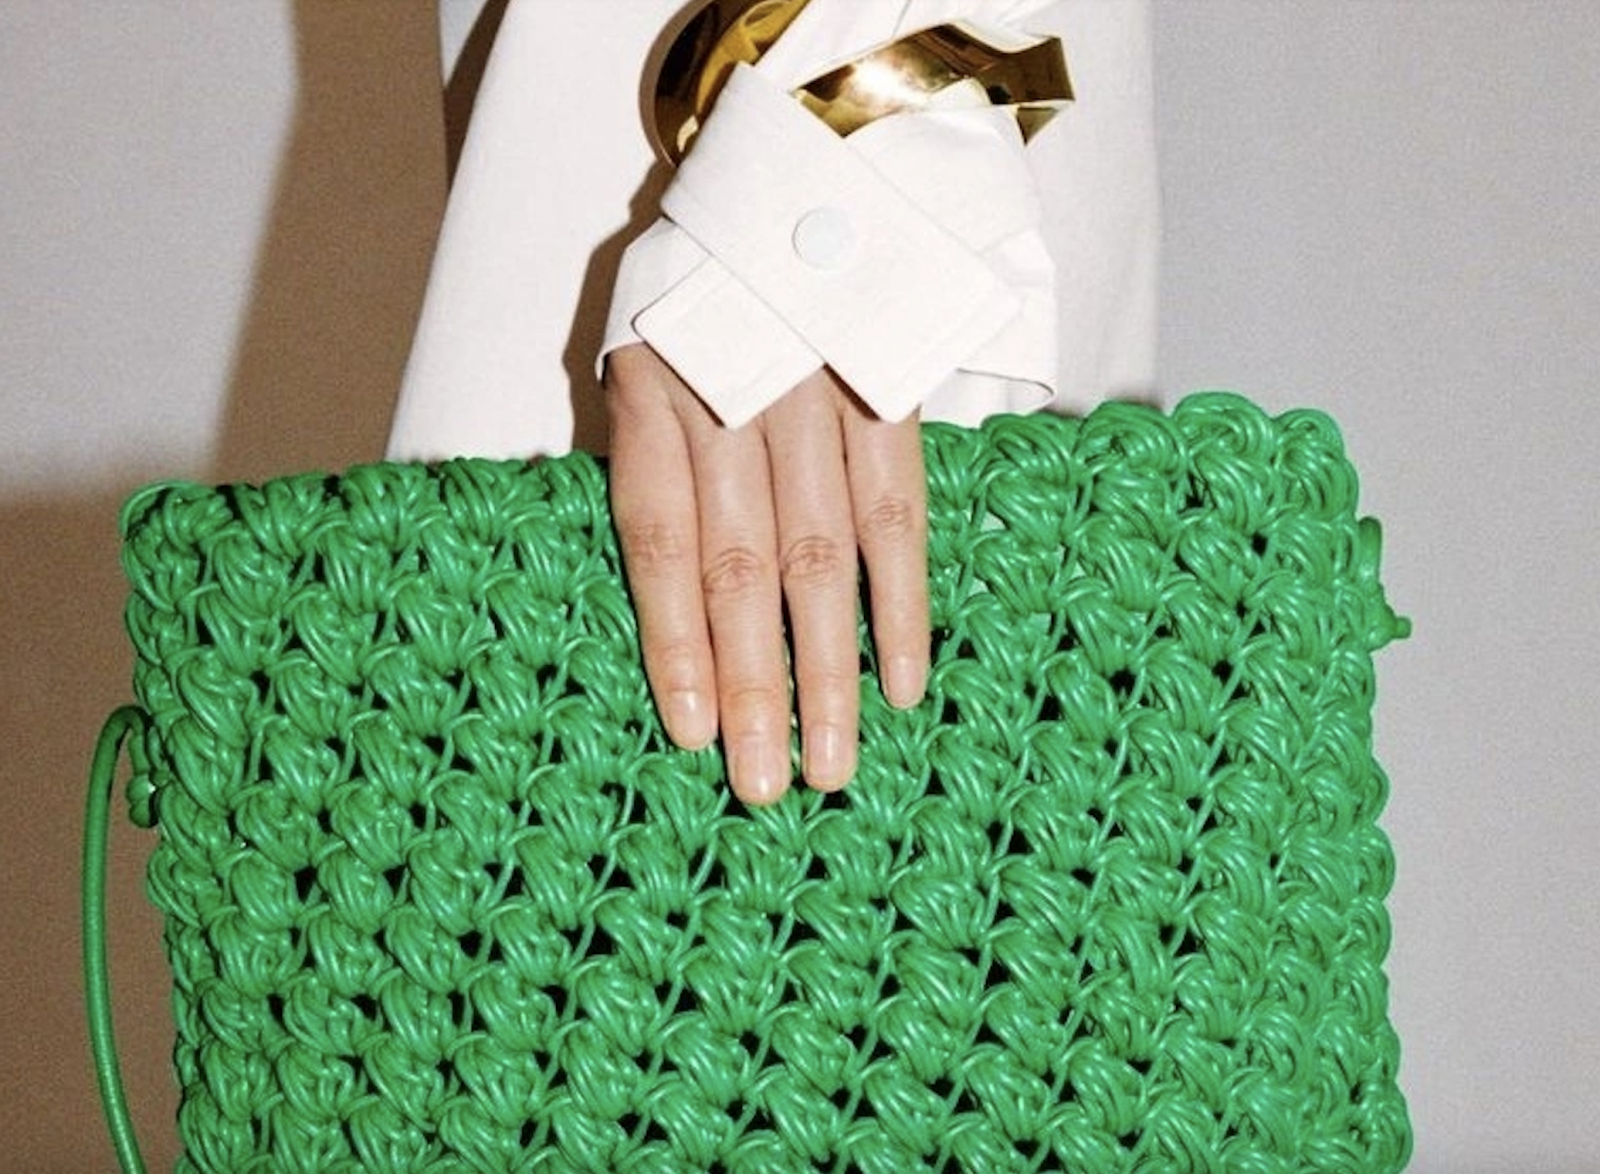 Bottega Veneta Green May Be the Brand's Biggest New Asset - The Fashion Law